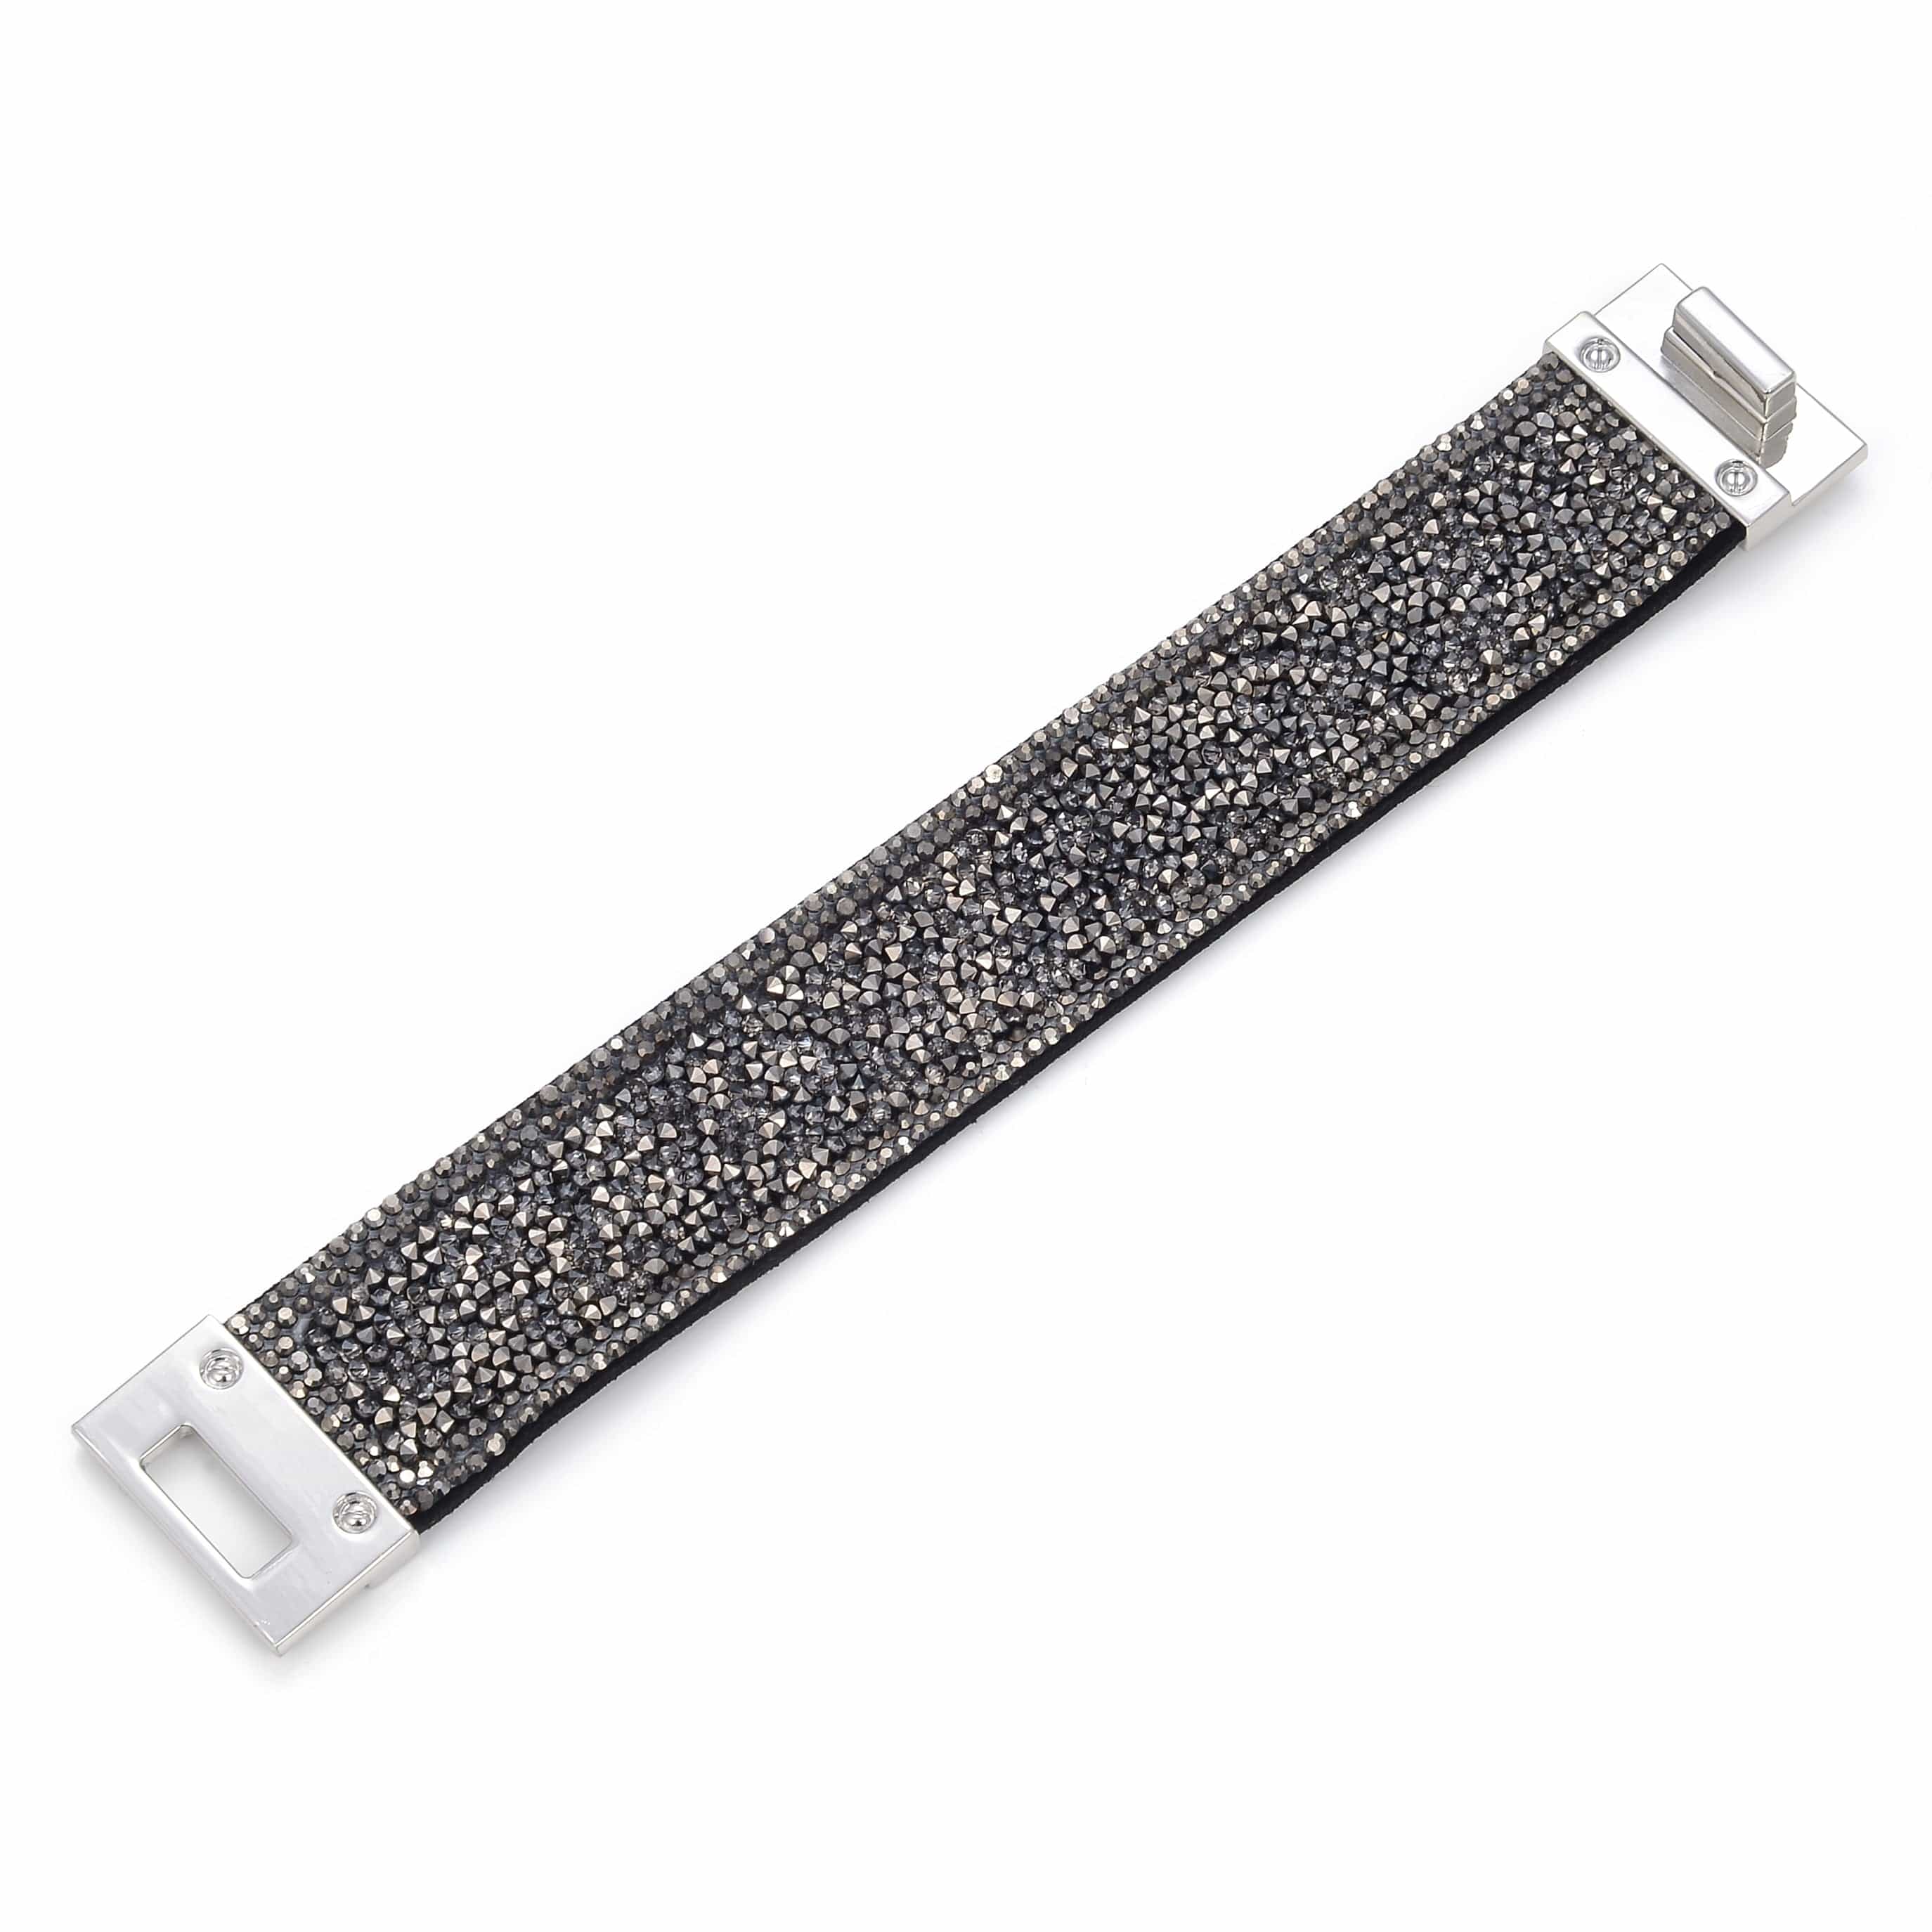 kalifano multiwrap bracelets short swarovski crystal leather band bracelet gray with toggle lock bmw 28 gy 33231068201154